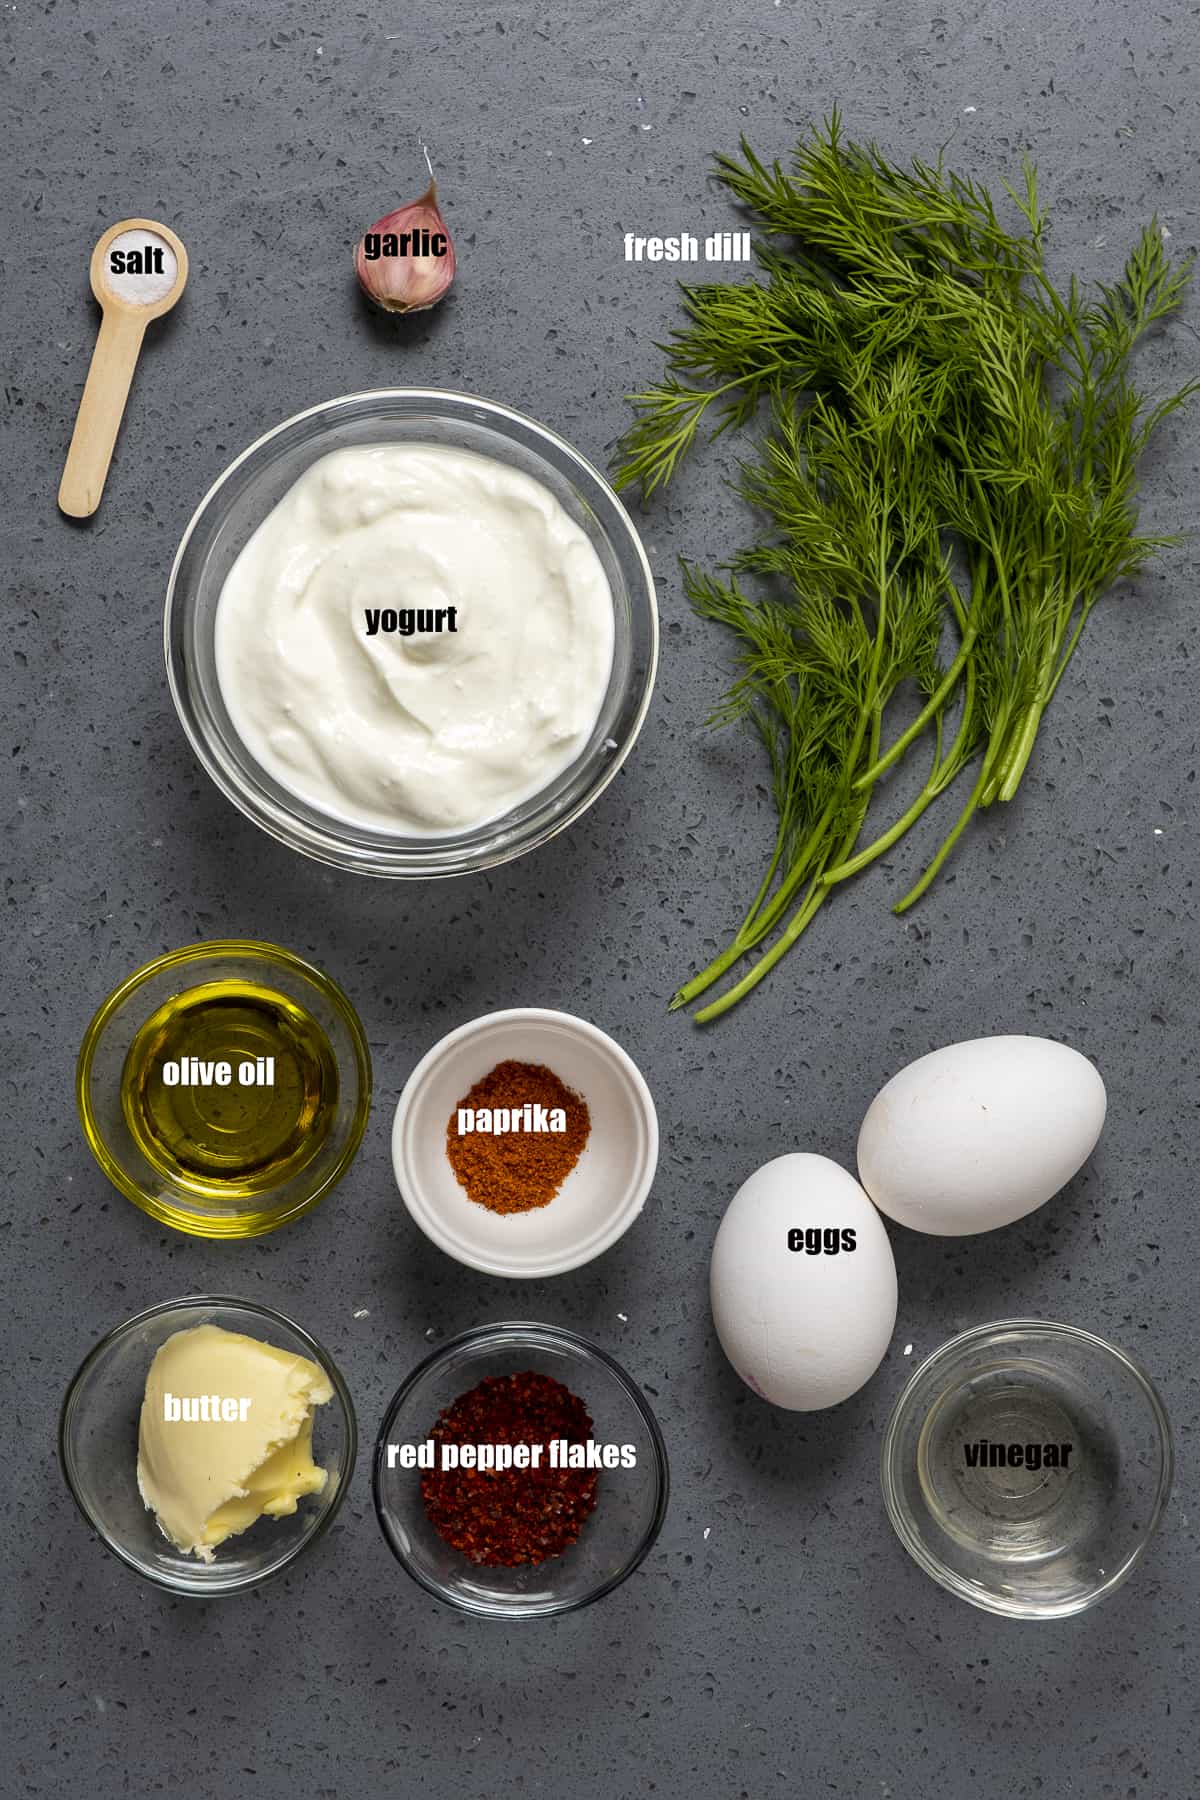 Eggs, Greek yogurt, fresh dill, butter, olive oil, red pepper flakes, paprika, garlic clove, salt in a teaspoon on a dark background.